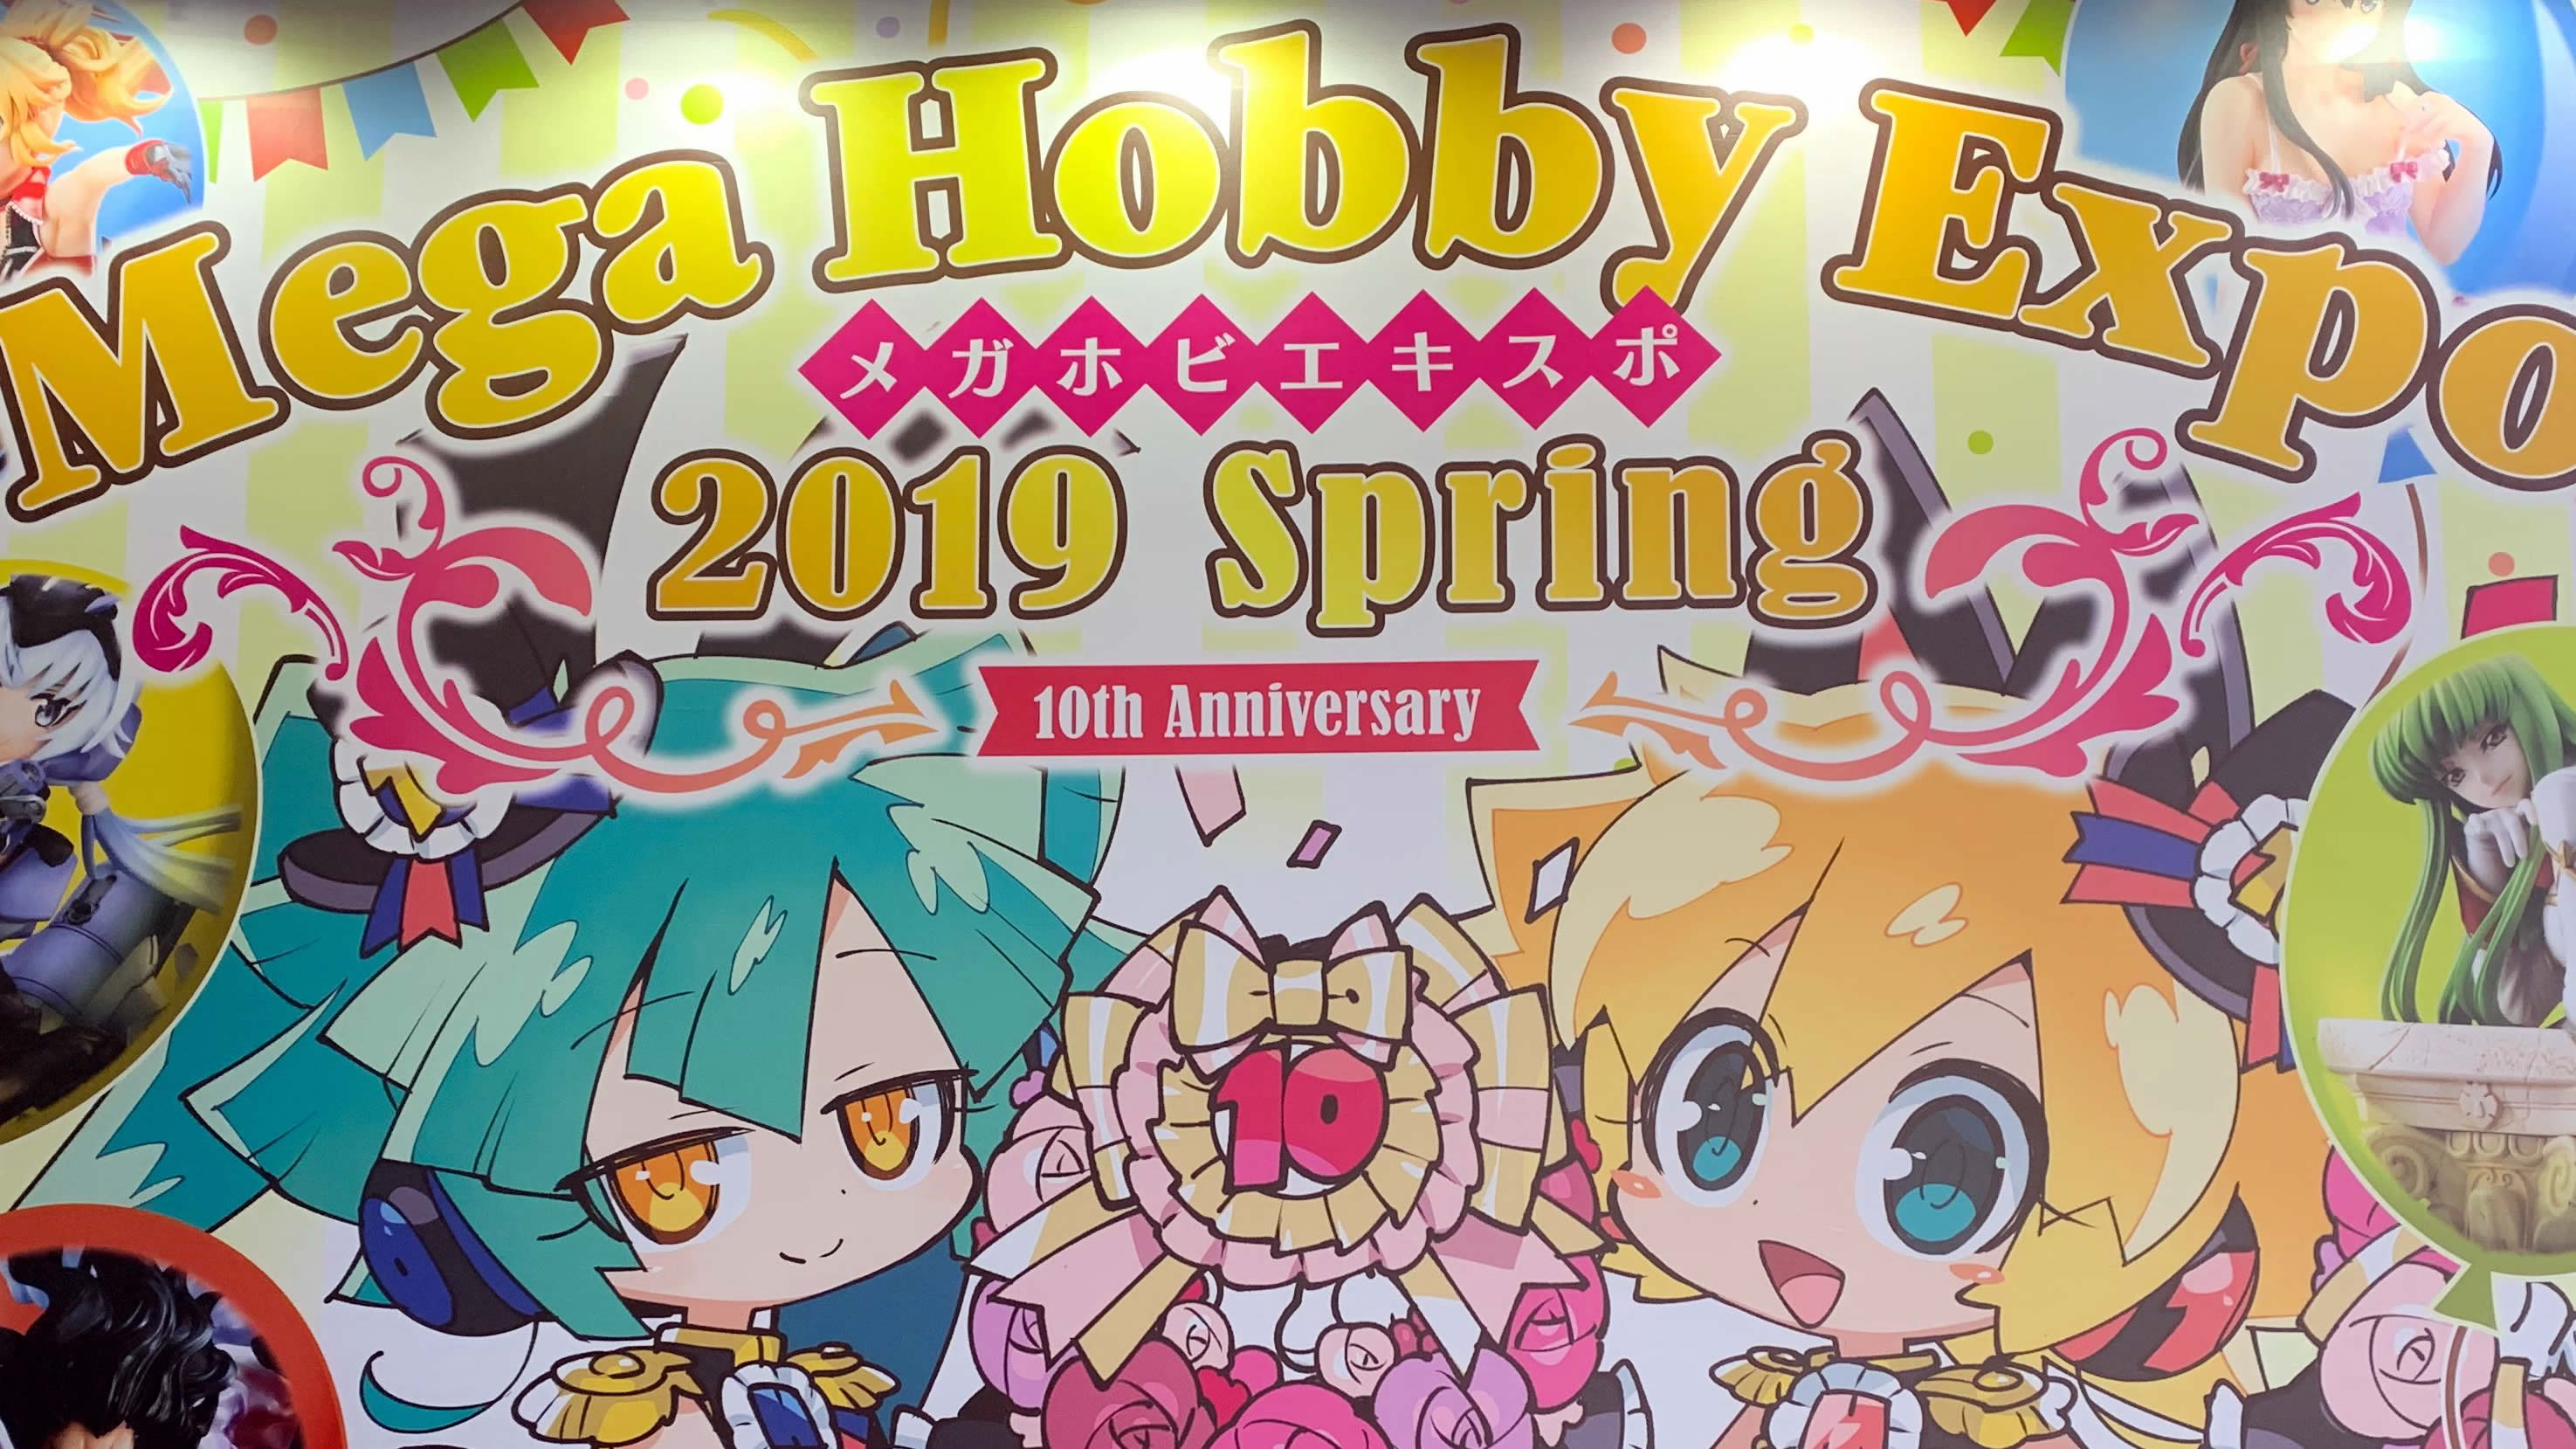 Mega Hobby Expo 2019 Spring tutte le figure a tema videogames